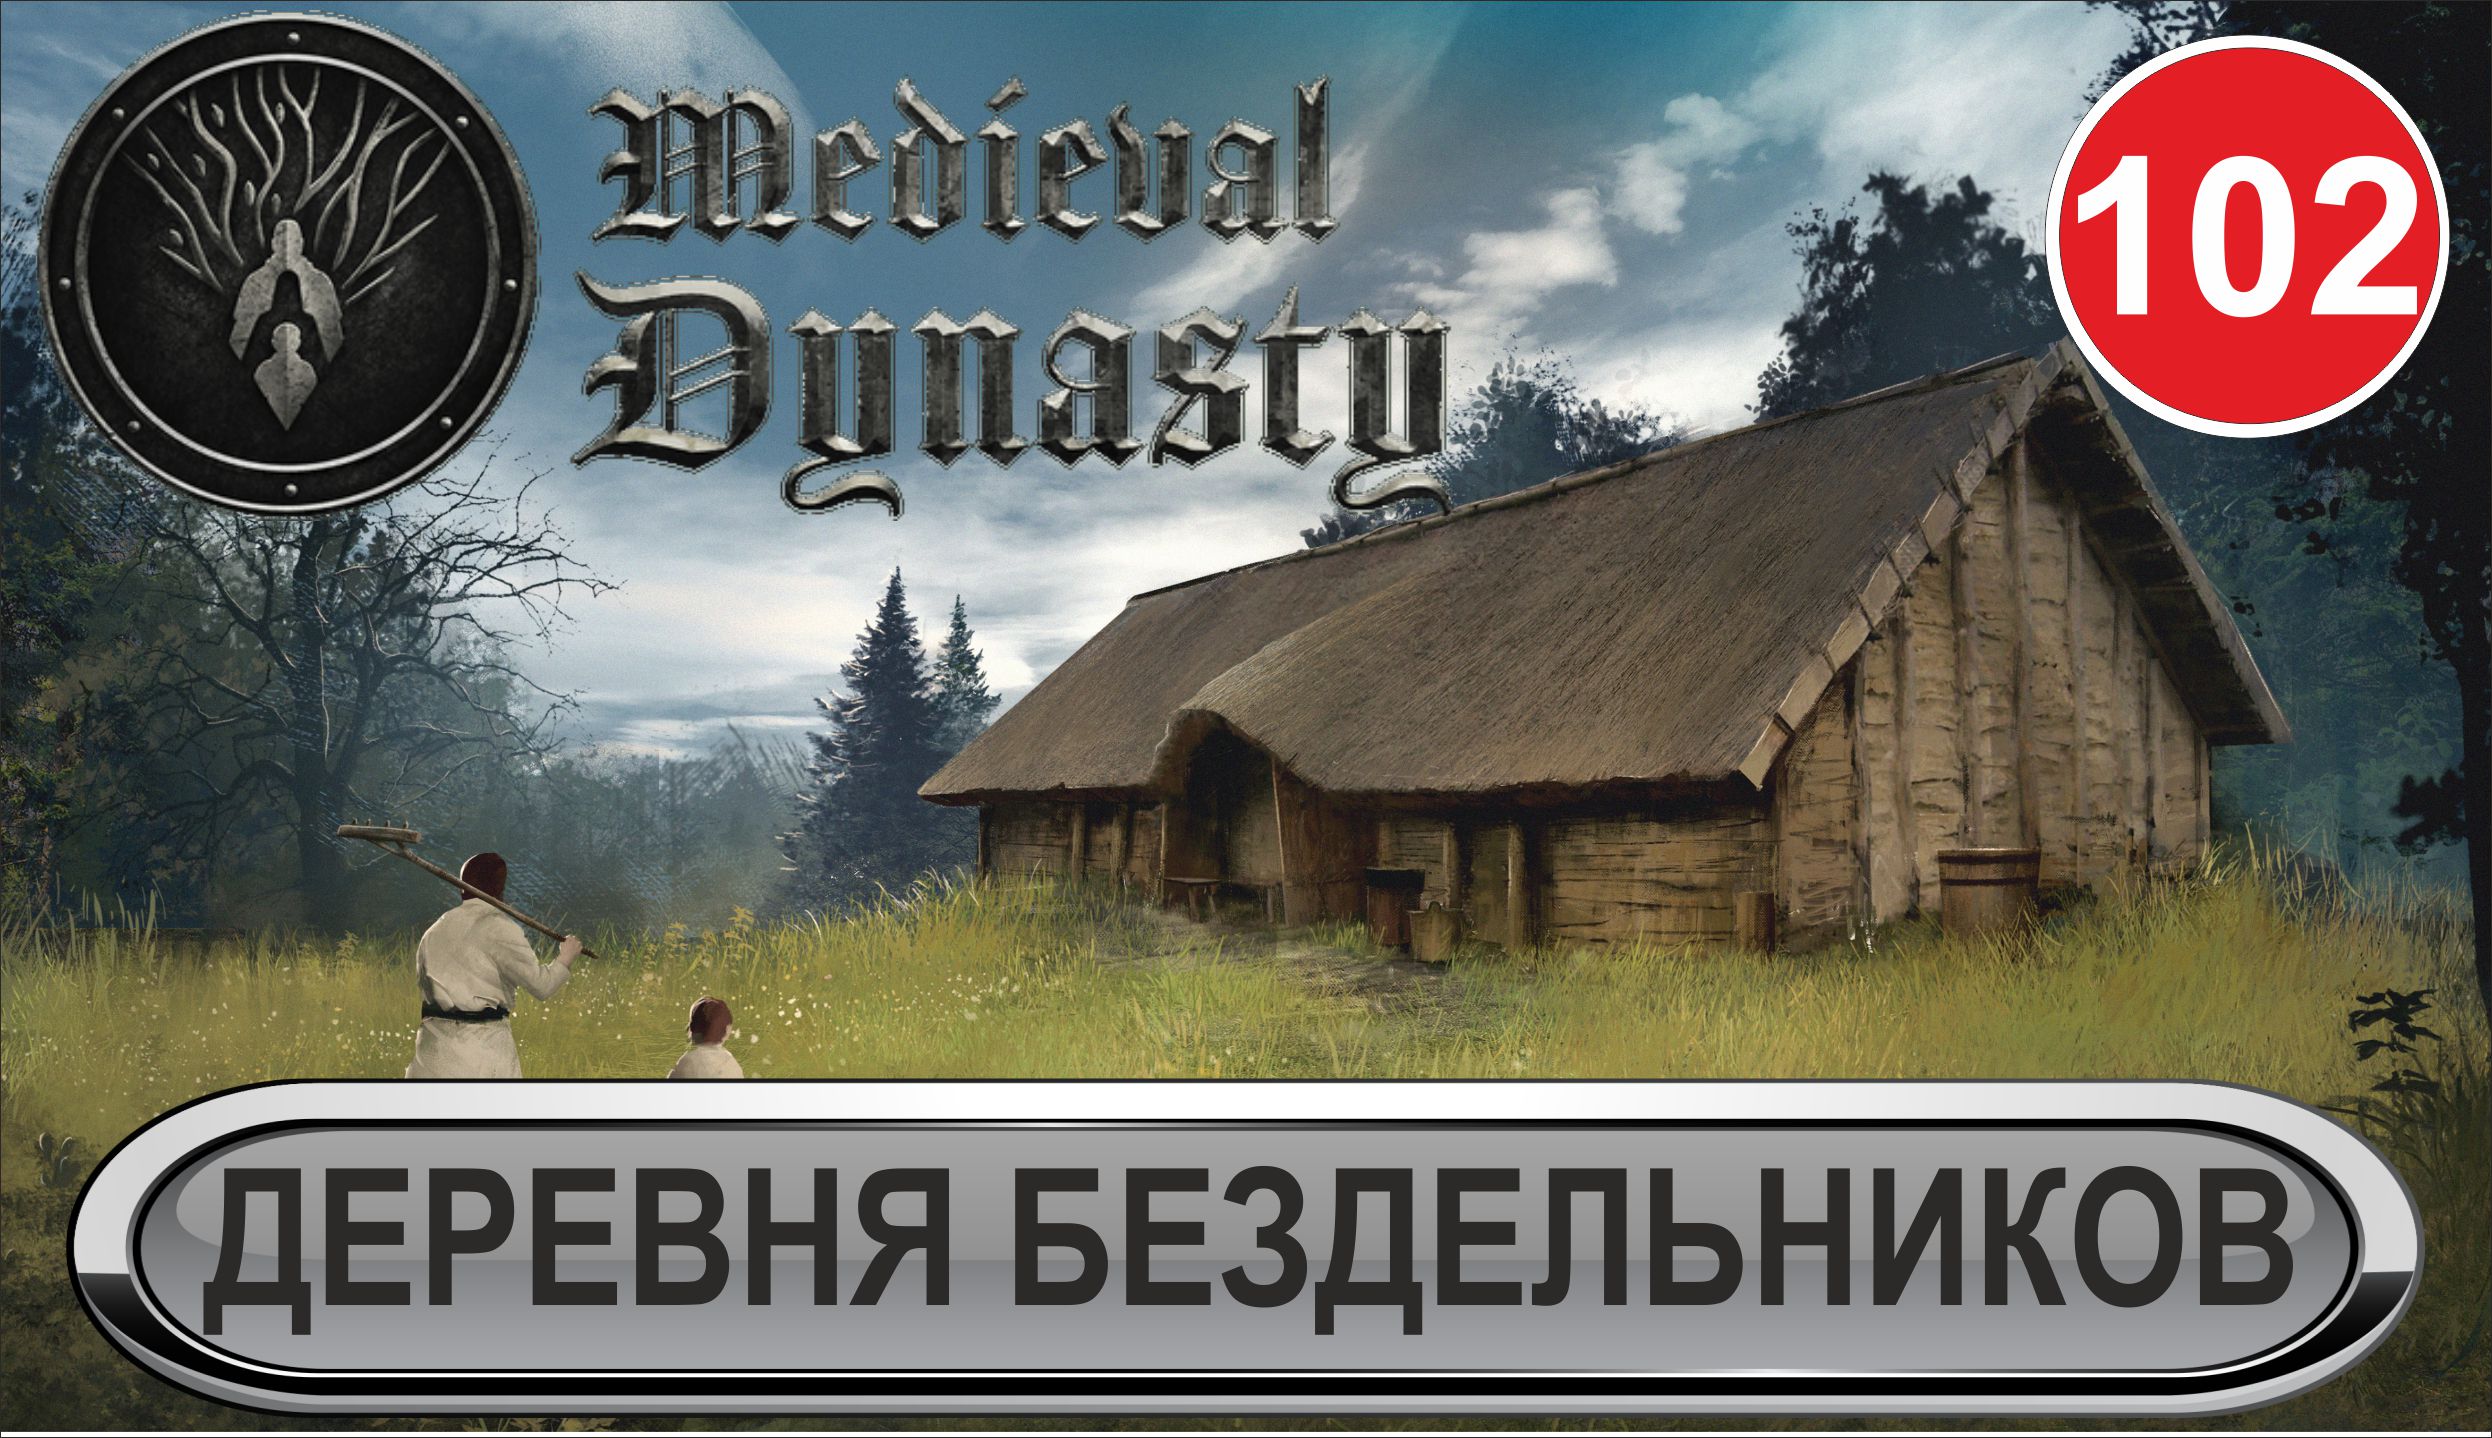 Medieval Dynasty - Деревня бездельников